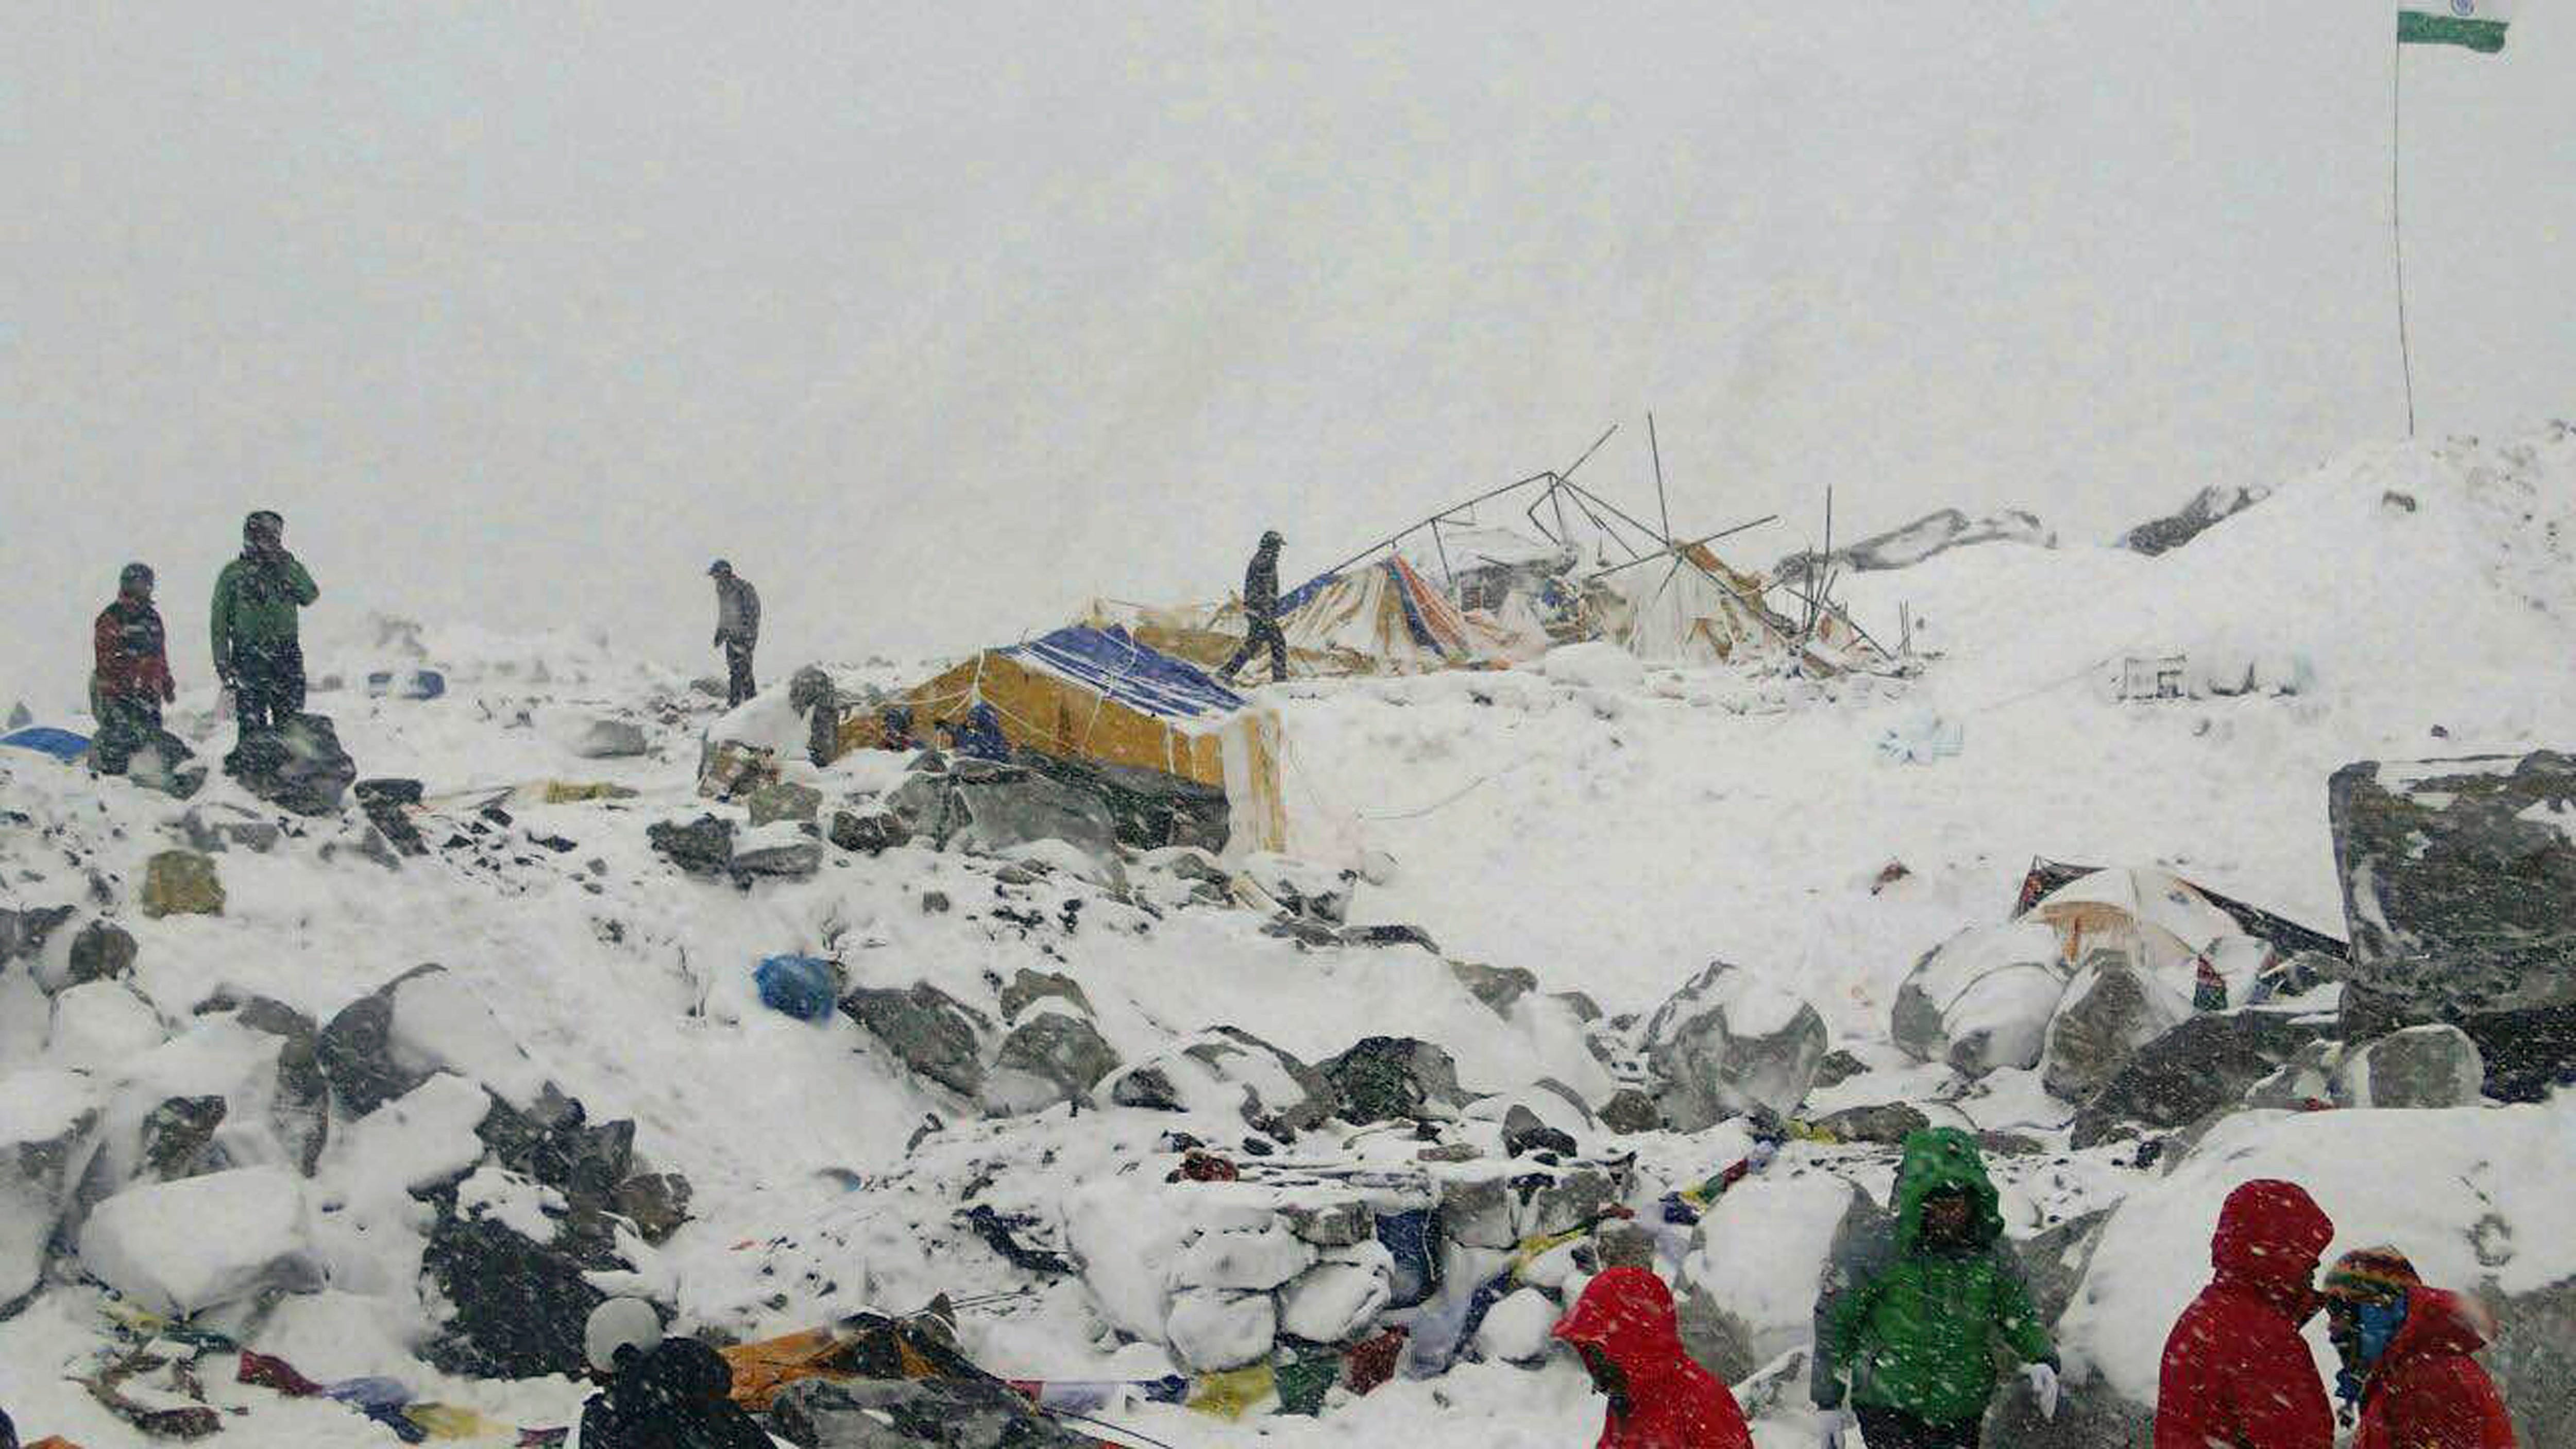 Mount Everest avalanche survivor: I had to survive